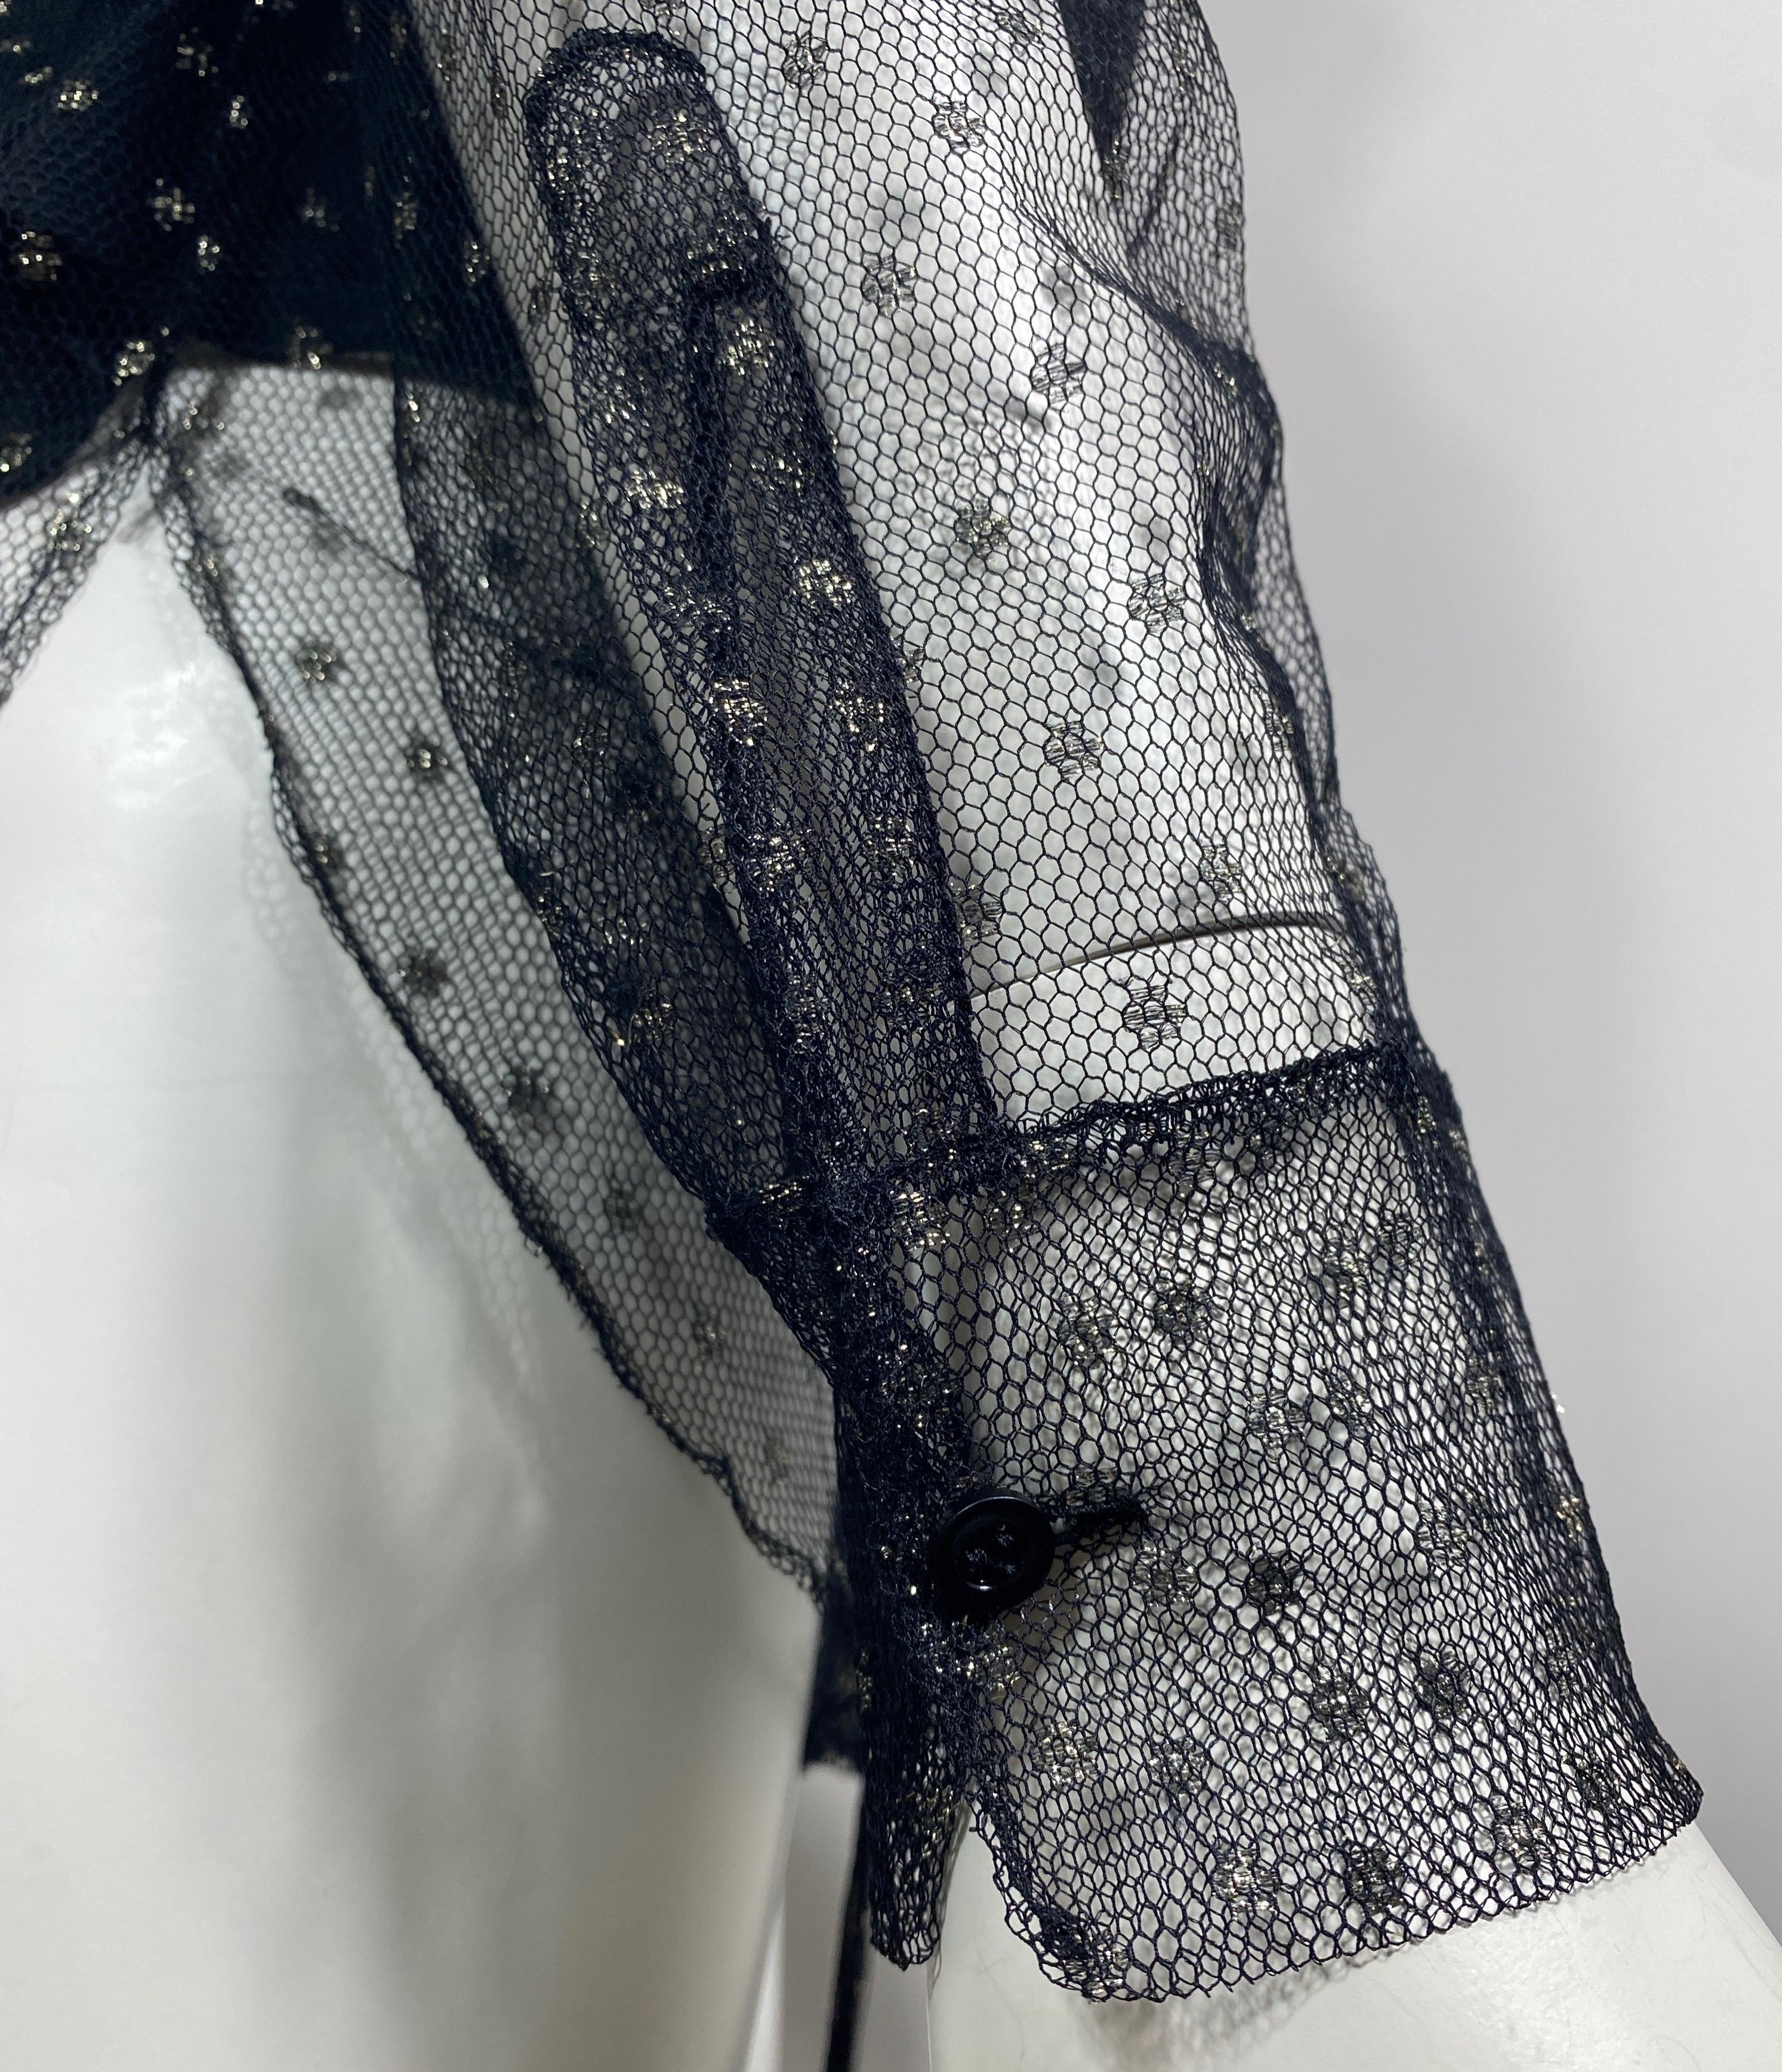 Christian Dior Mini Polka Dot Sheer Mesh Top noir et or - Taille petite en vente 6